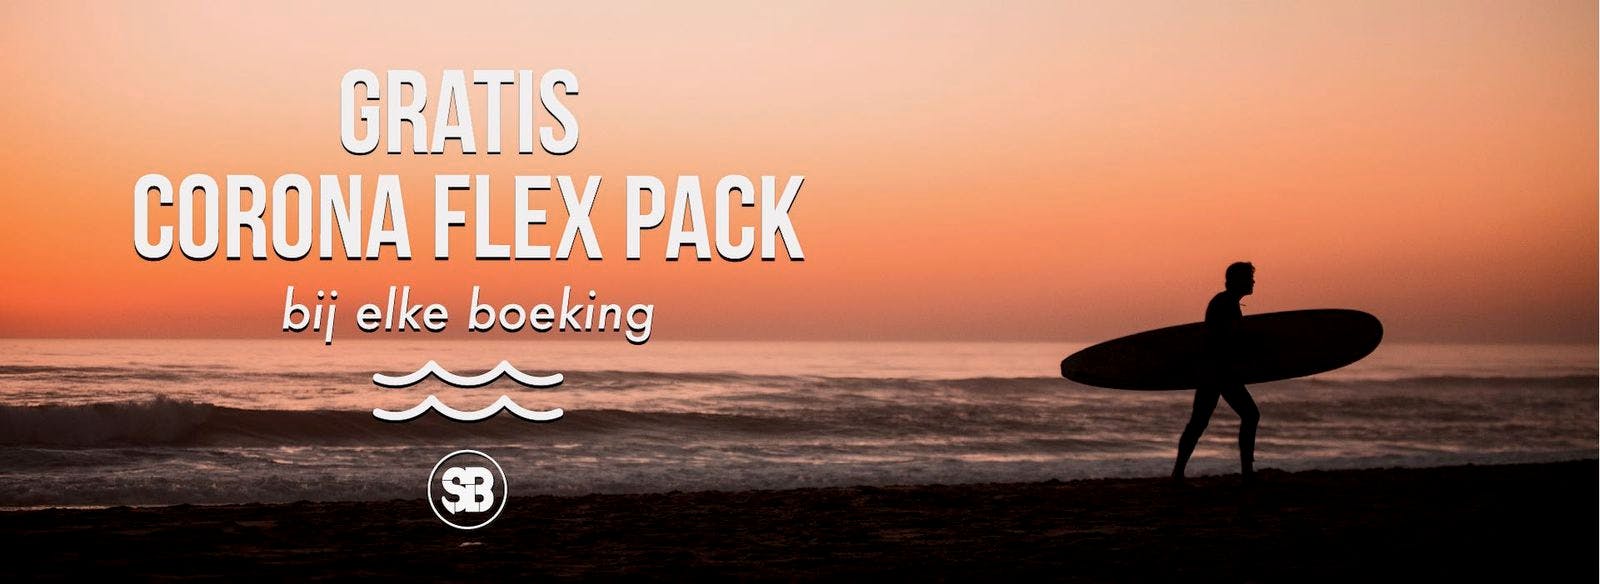 gratis corona flex pack